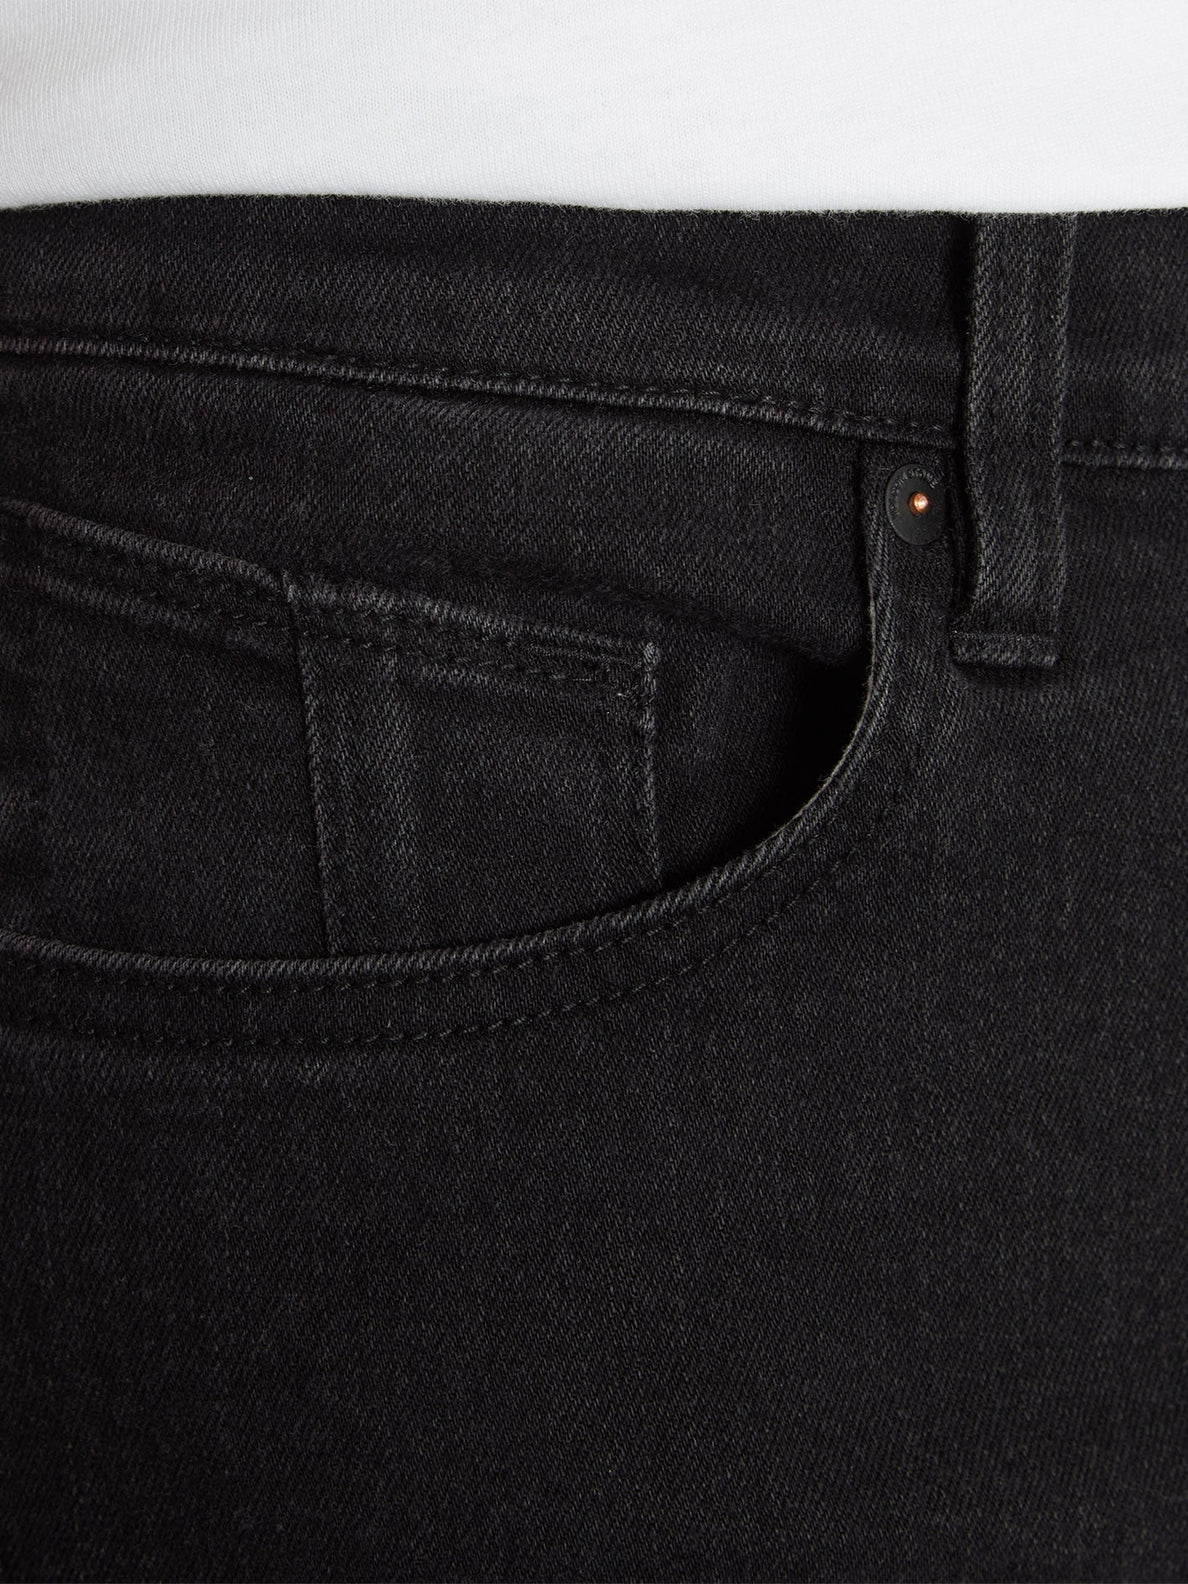 Vorta Jeans - BLACK OUT (A1912302_BKO) [2]